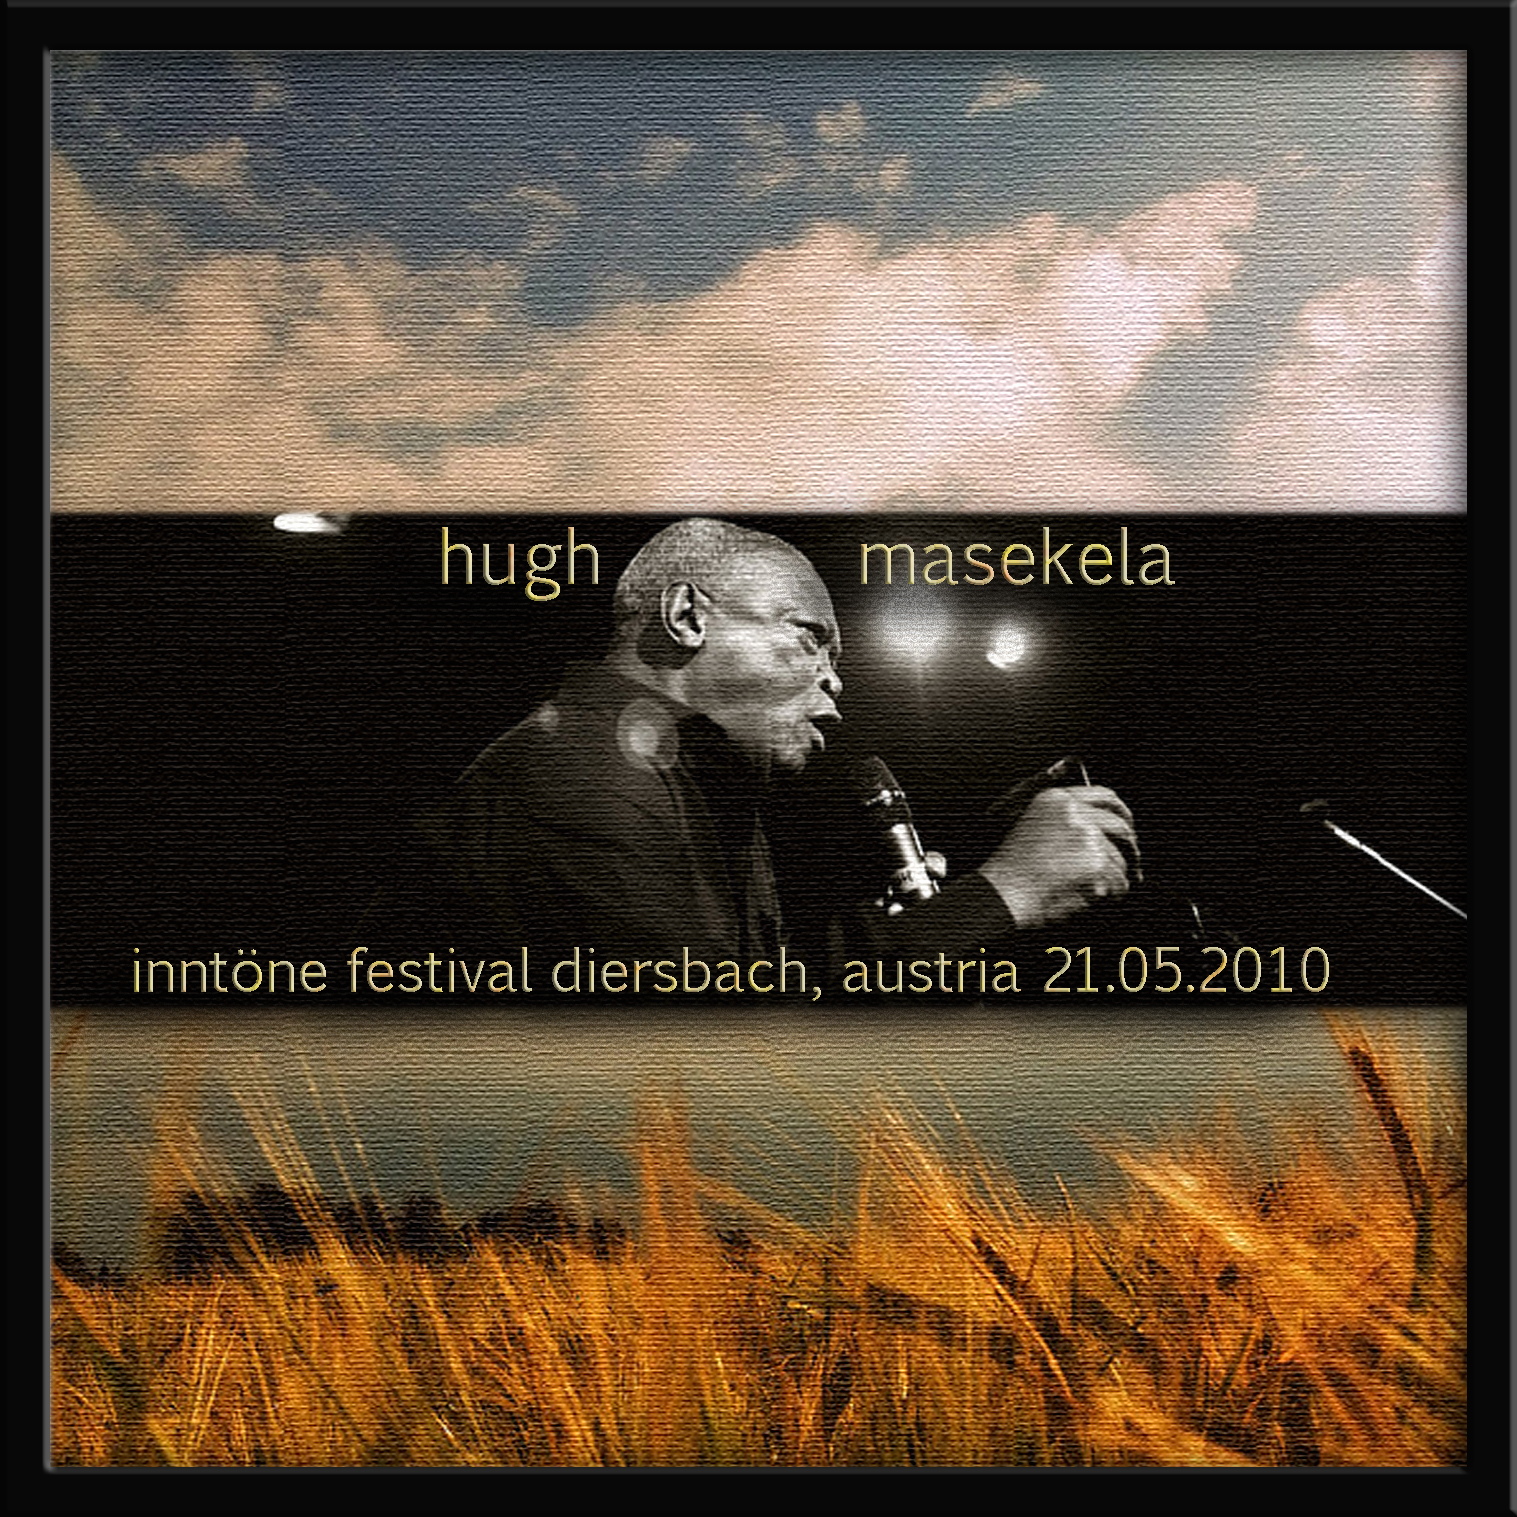 MASEKELA - Página 2 Hugh+masekela+-+diersbach+2010-05-21+f